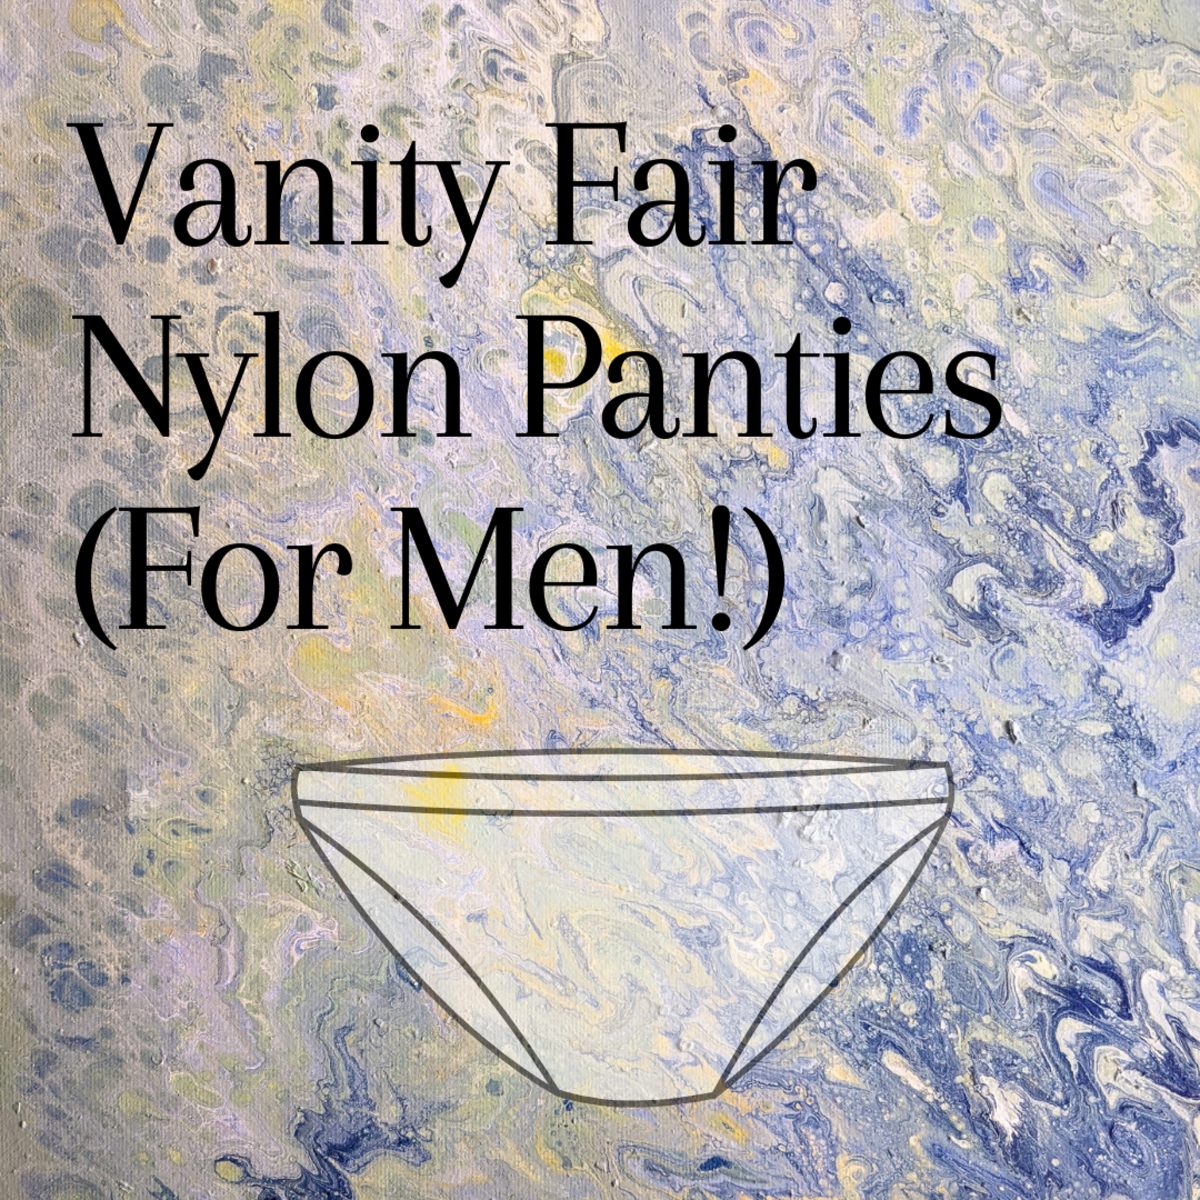 Feel Good Panties: Vanity Fair Nylon Panties (for Men!)